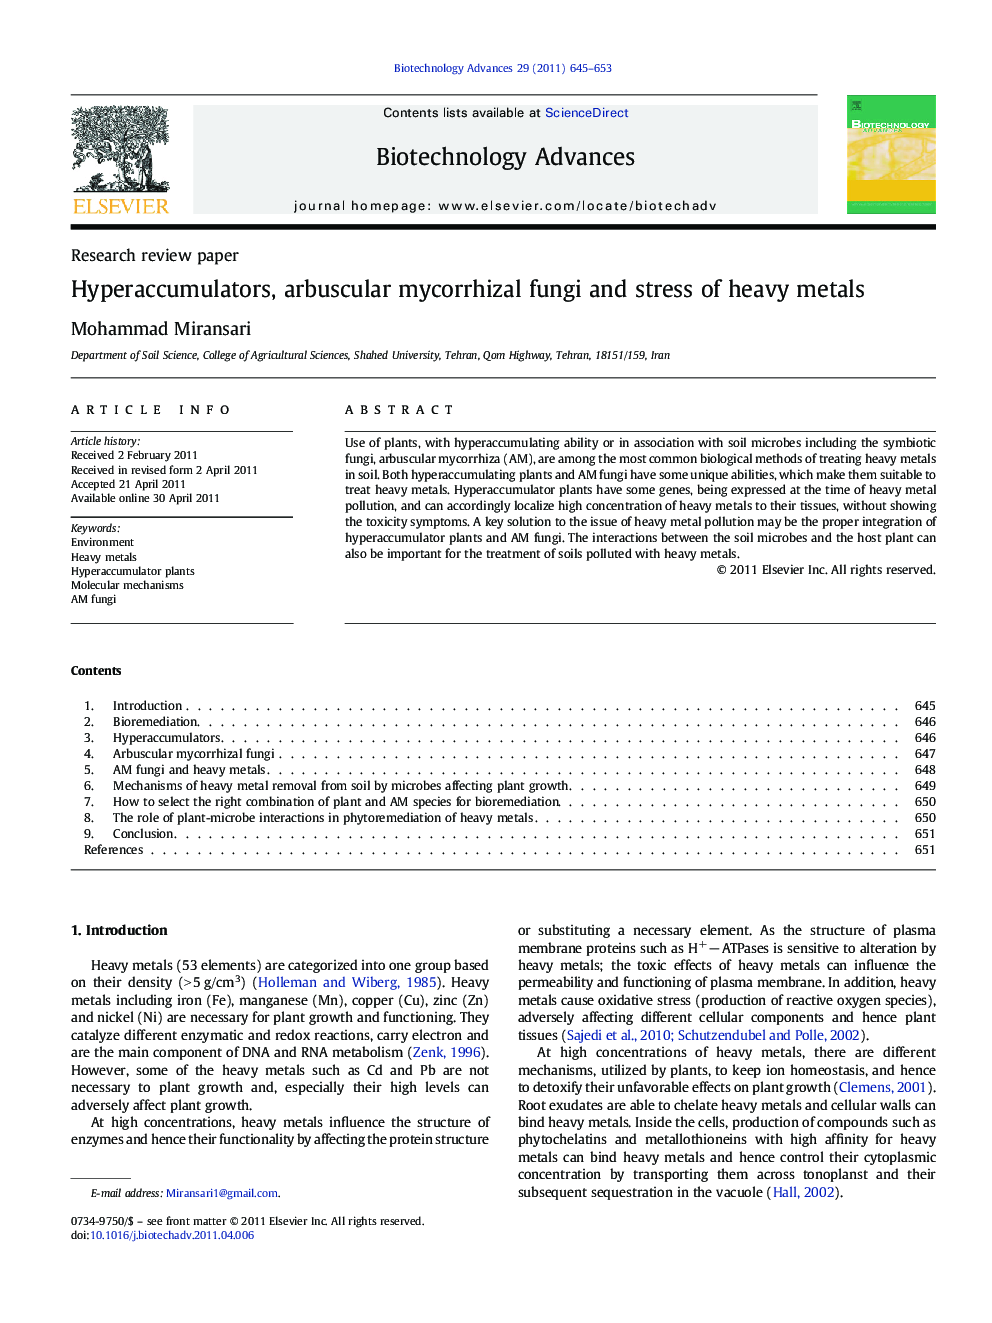 Hyperaccumulators, arbuscular mycorrhizal fungi and stress of heavy metals